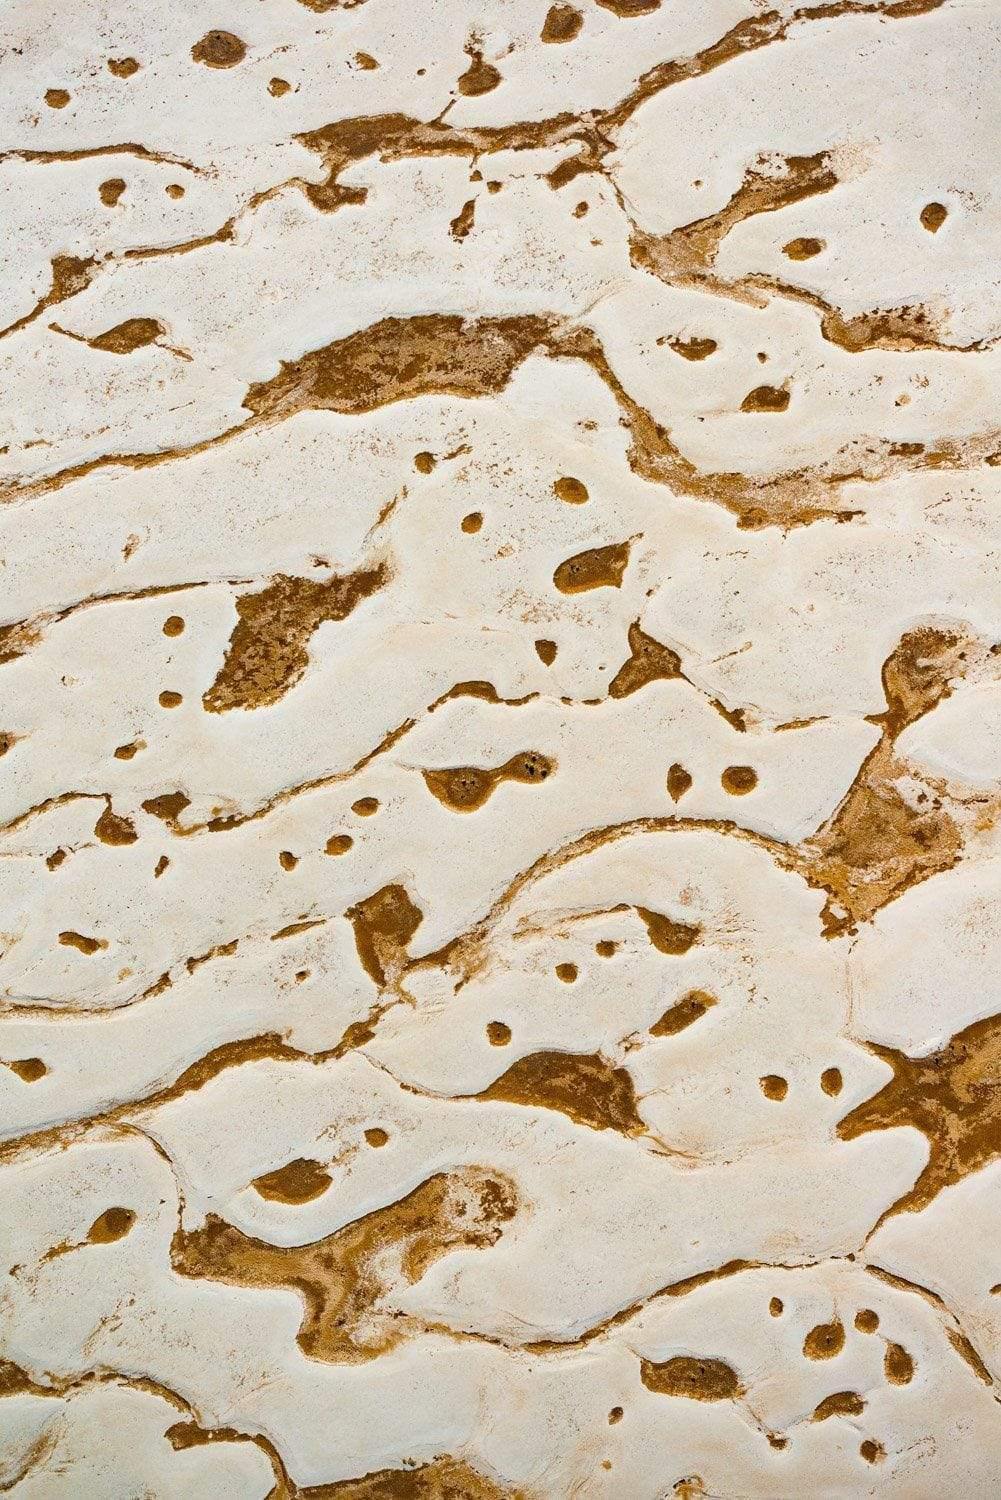 A unique texture of mustard color liquid on the land, Tadpoles